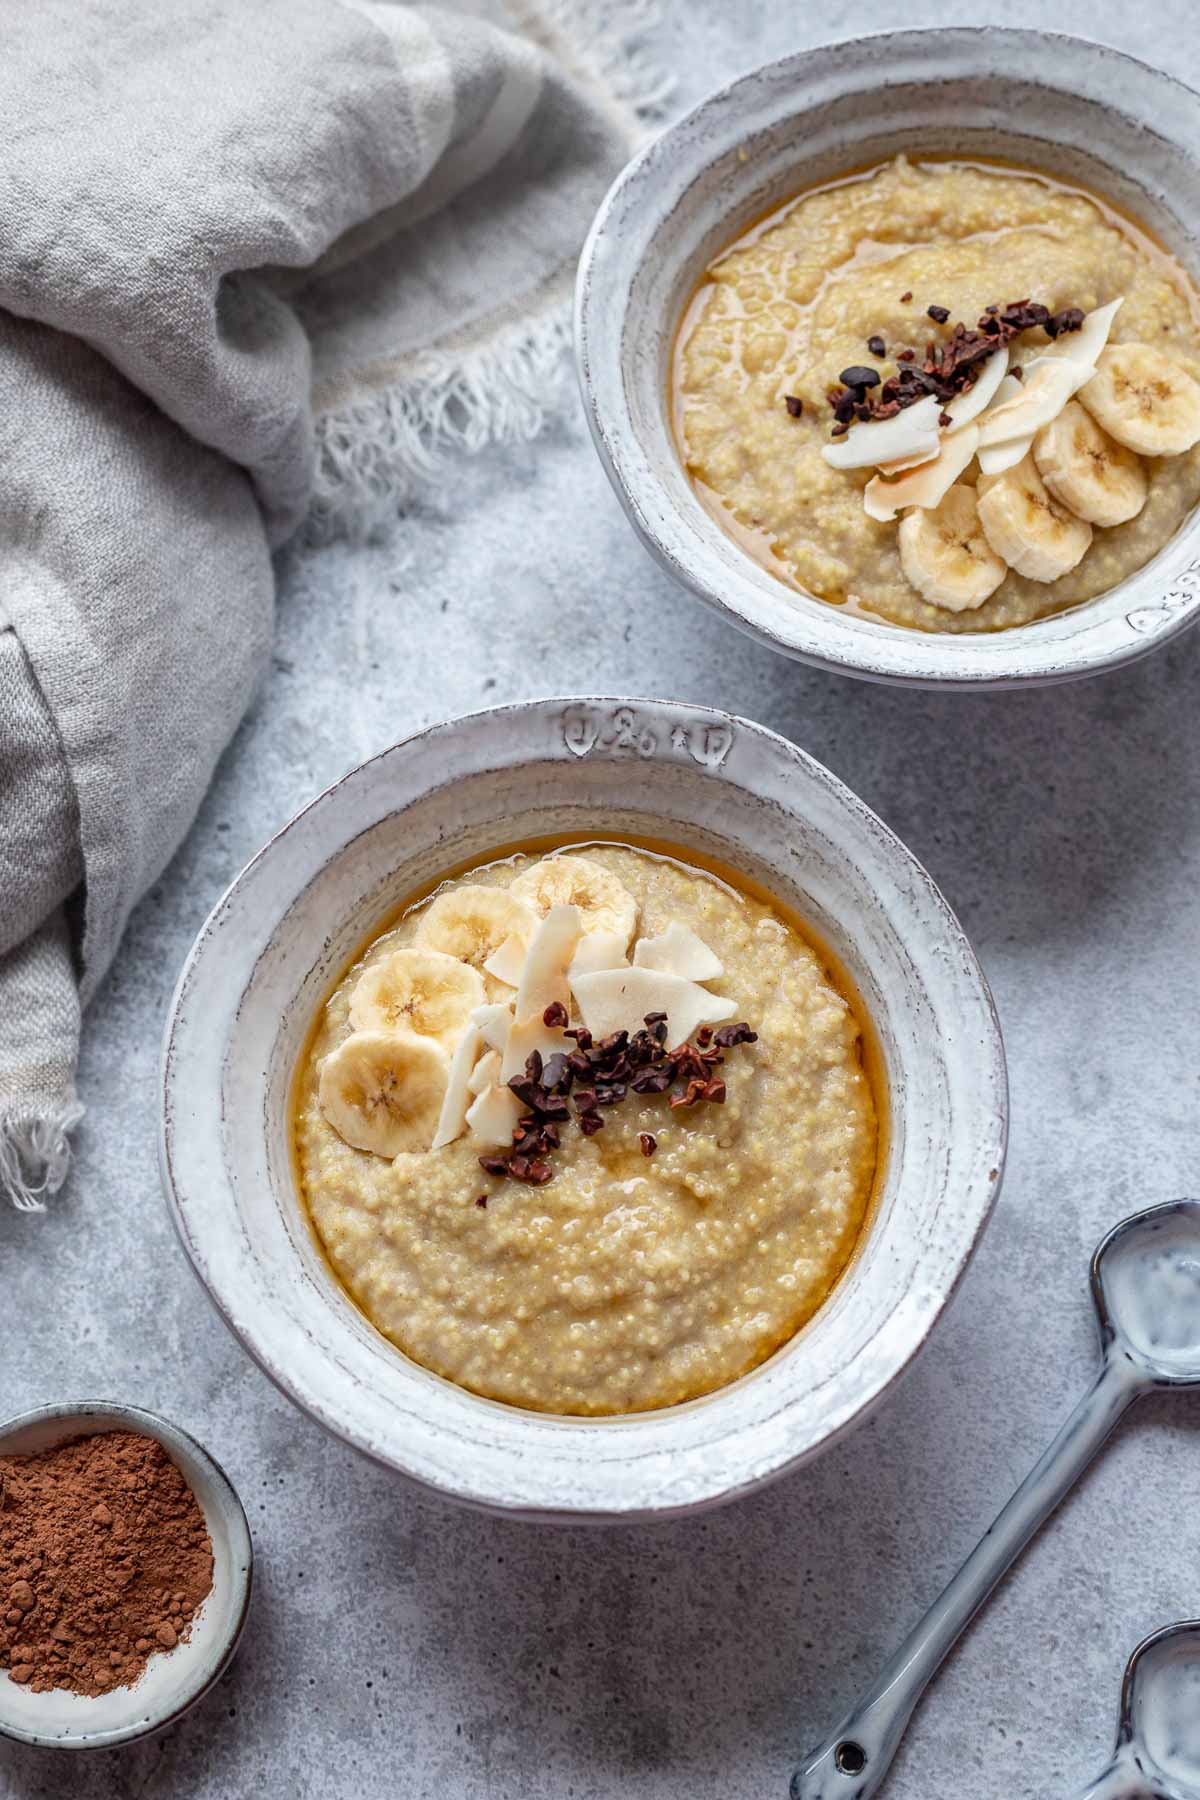 Millet porridge recipe with banana and coconut milk